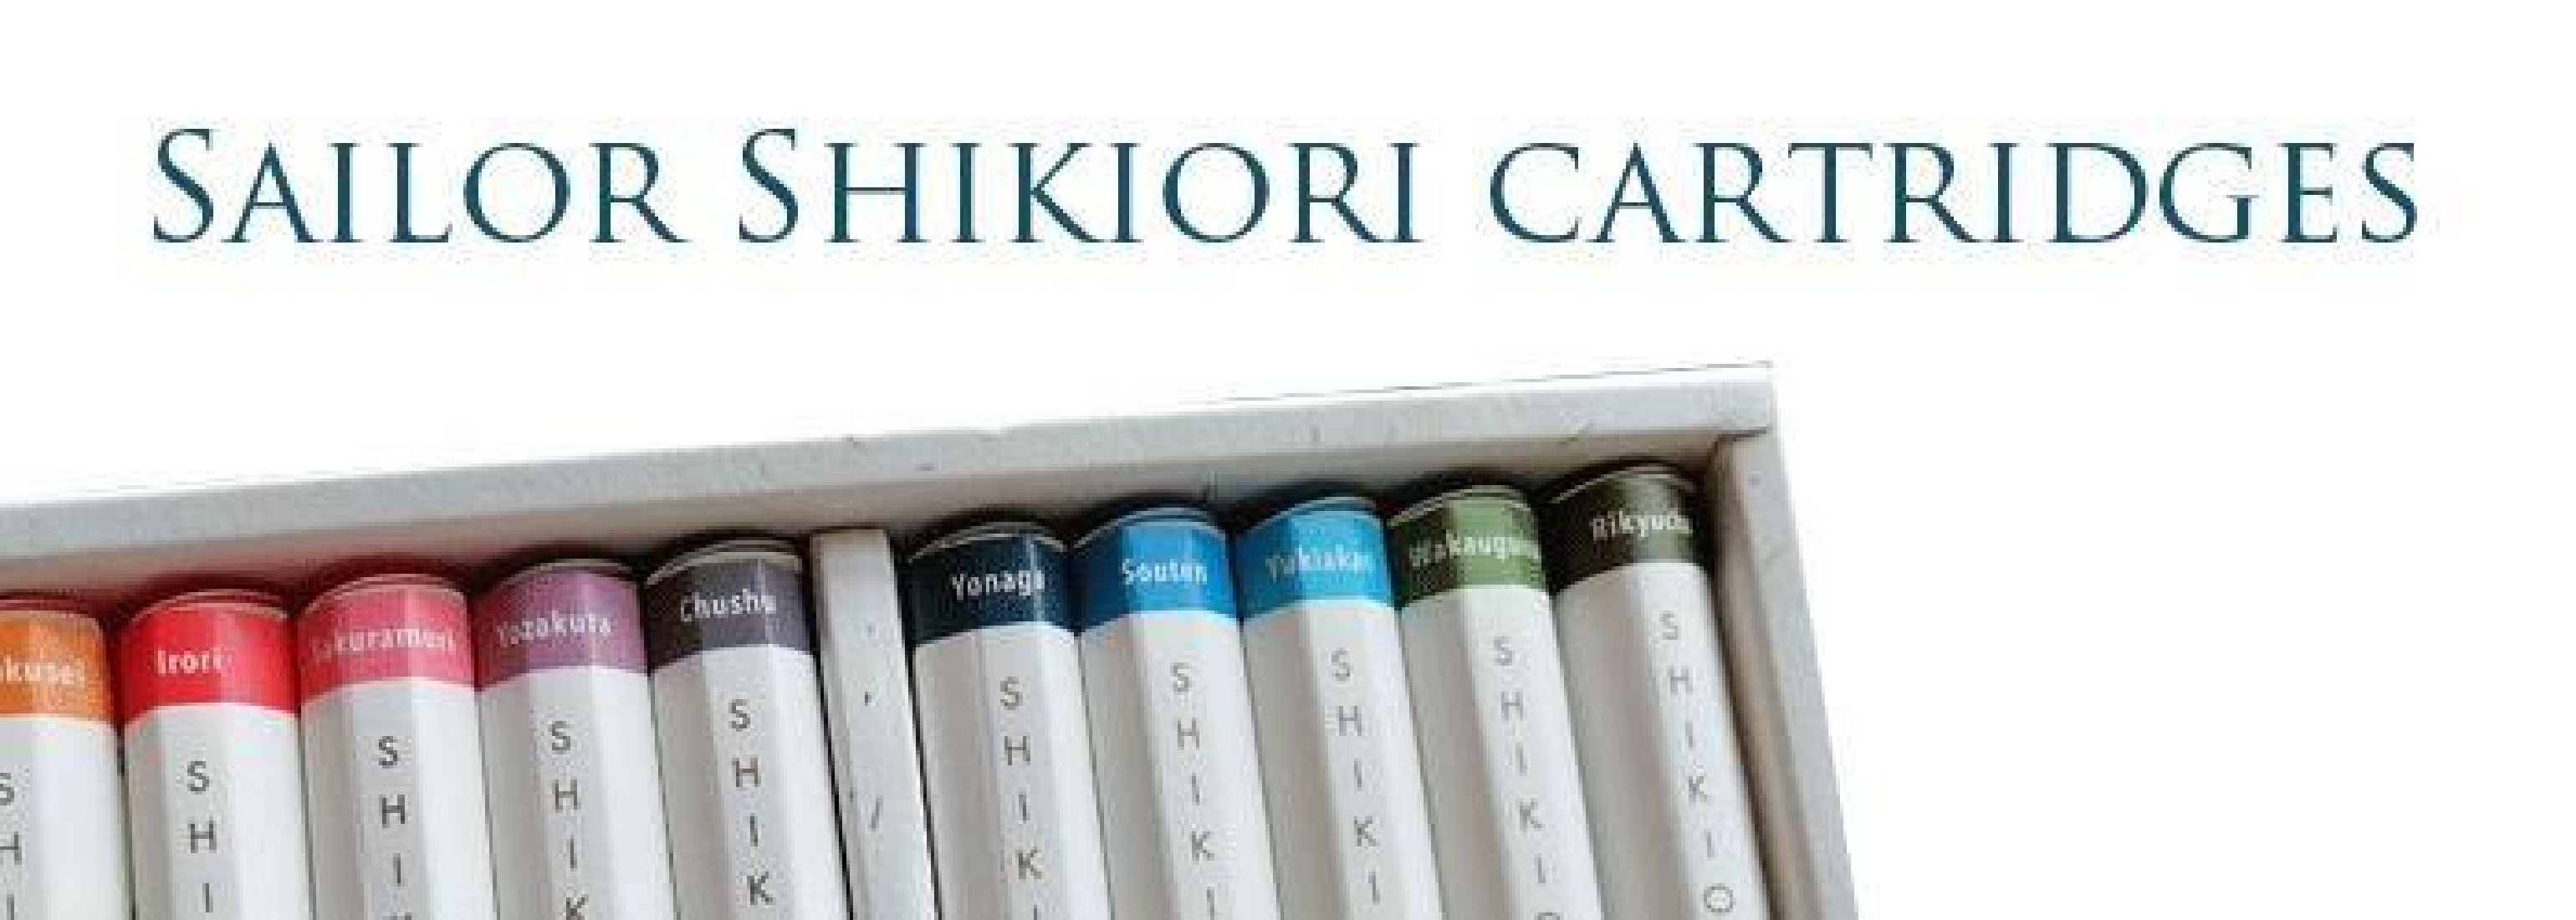 Sailor Shikiori ink cartidge four seasons (fall) 3pcs pack